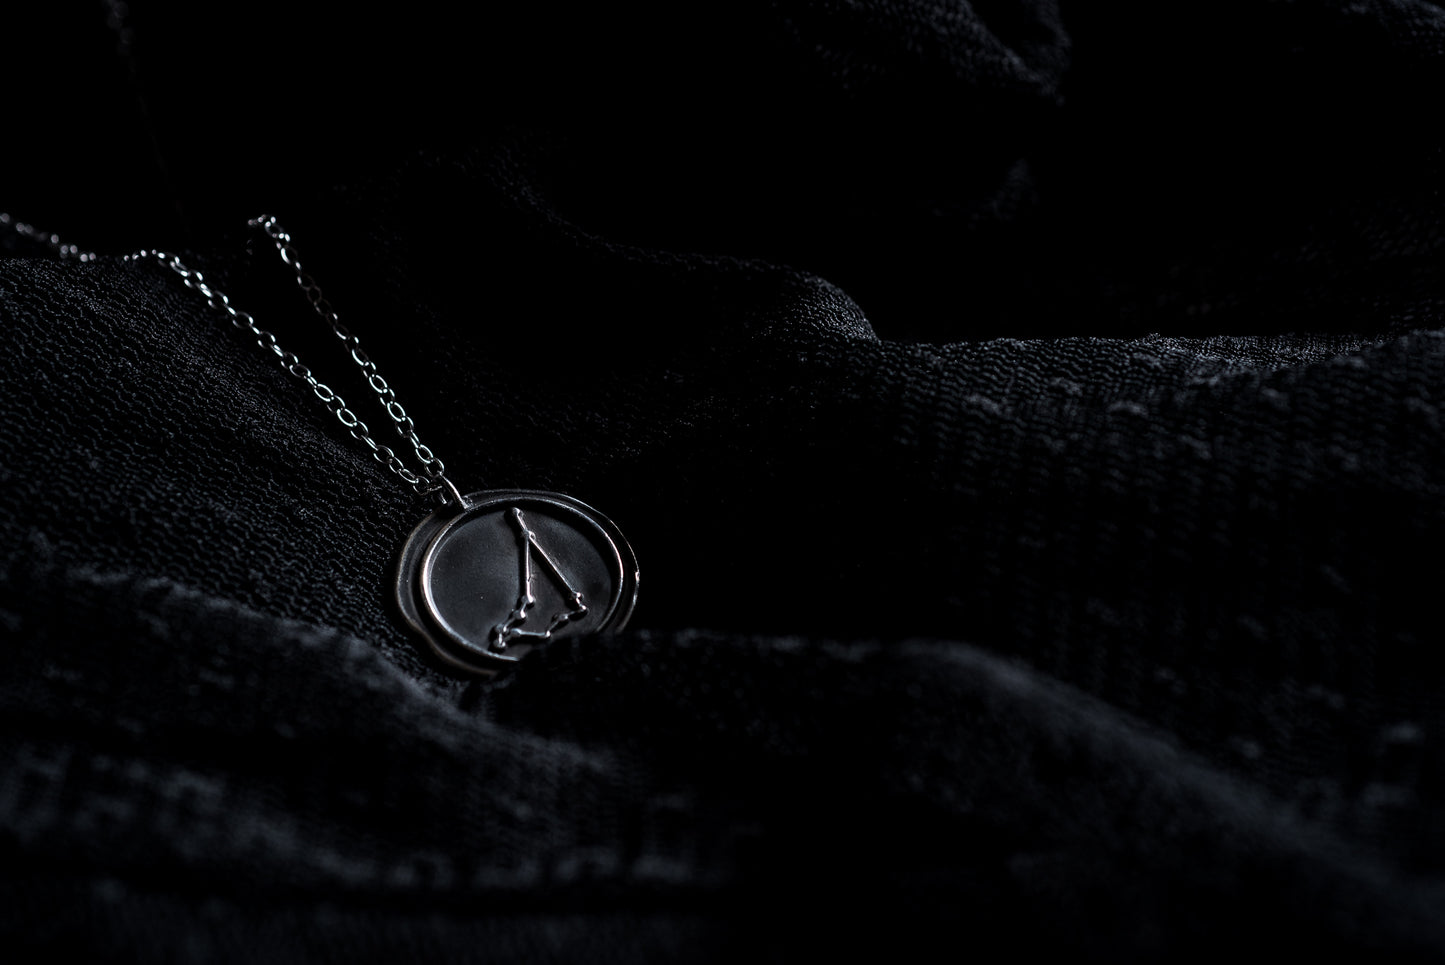 Capricorn zodiac necklace resting against a black background